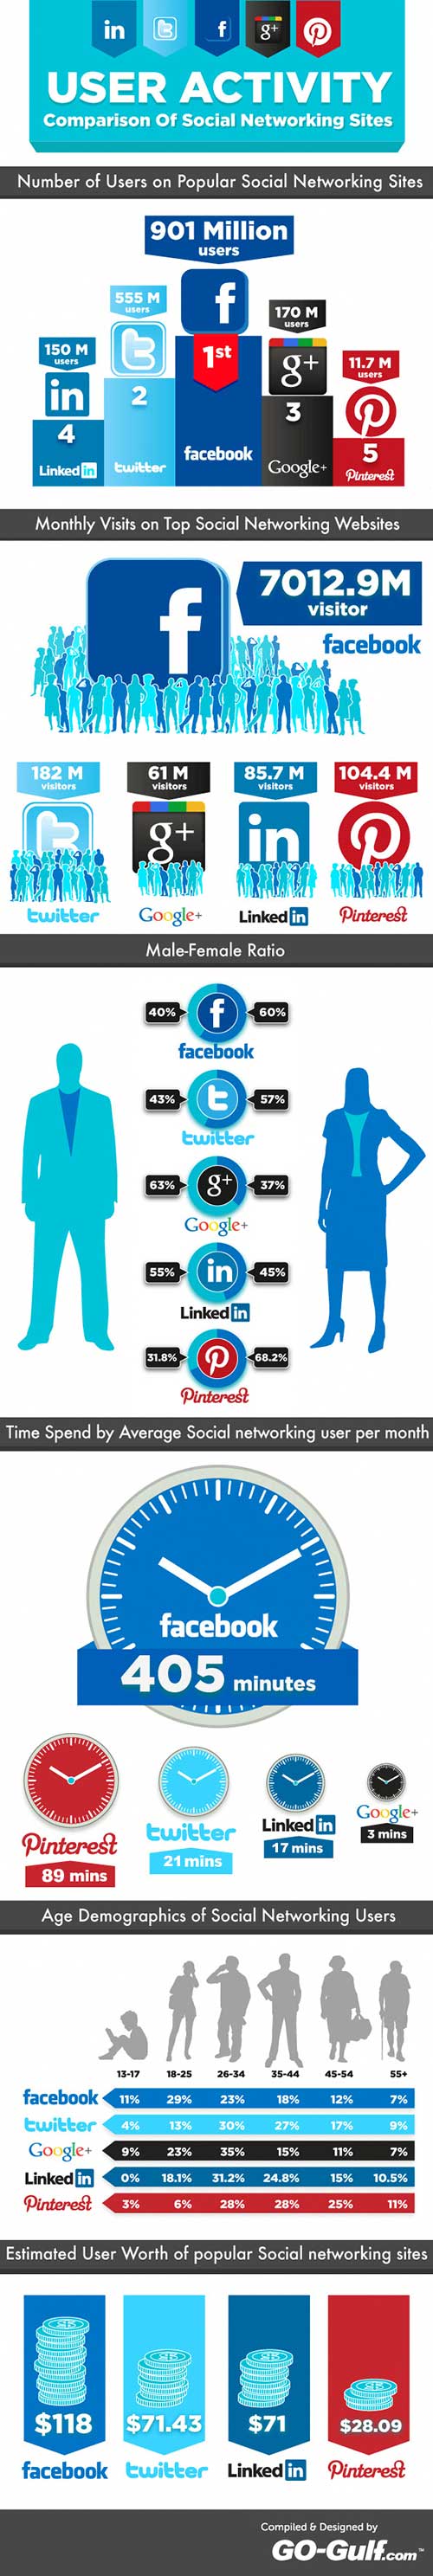 Comparaison Facebook, Twitter, Google Plus, LinkedIn et Pinterest